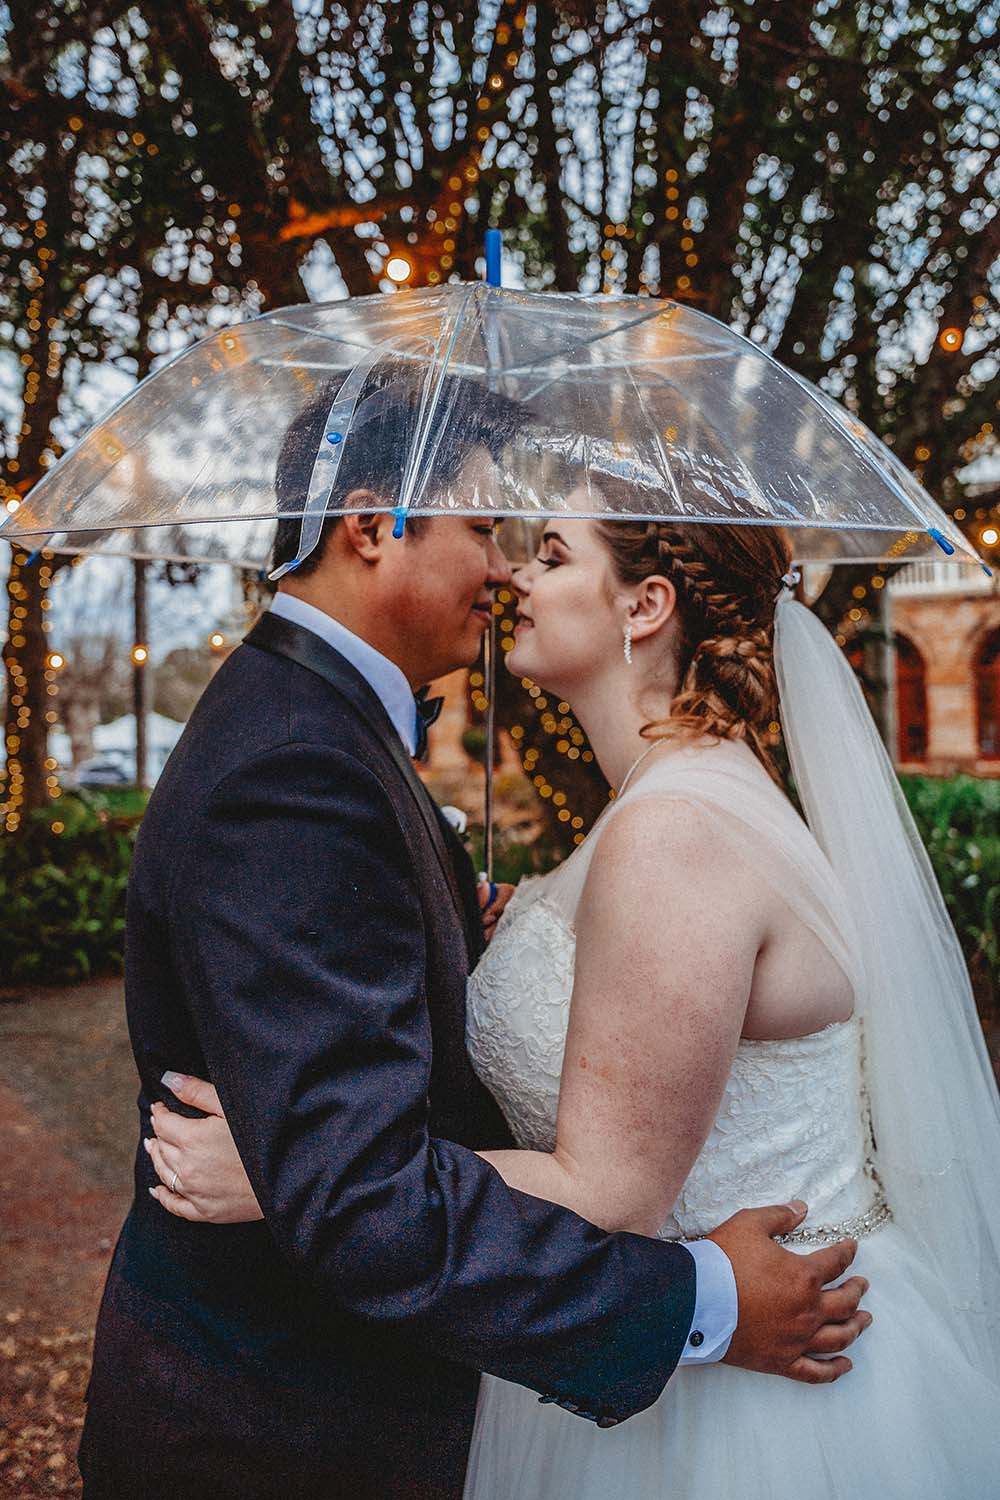 Wedding Photography - Couple under umbrella